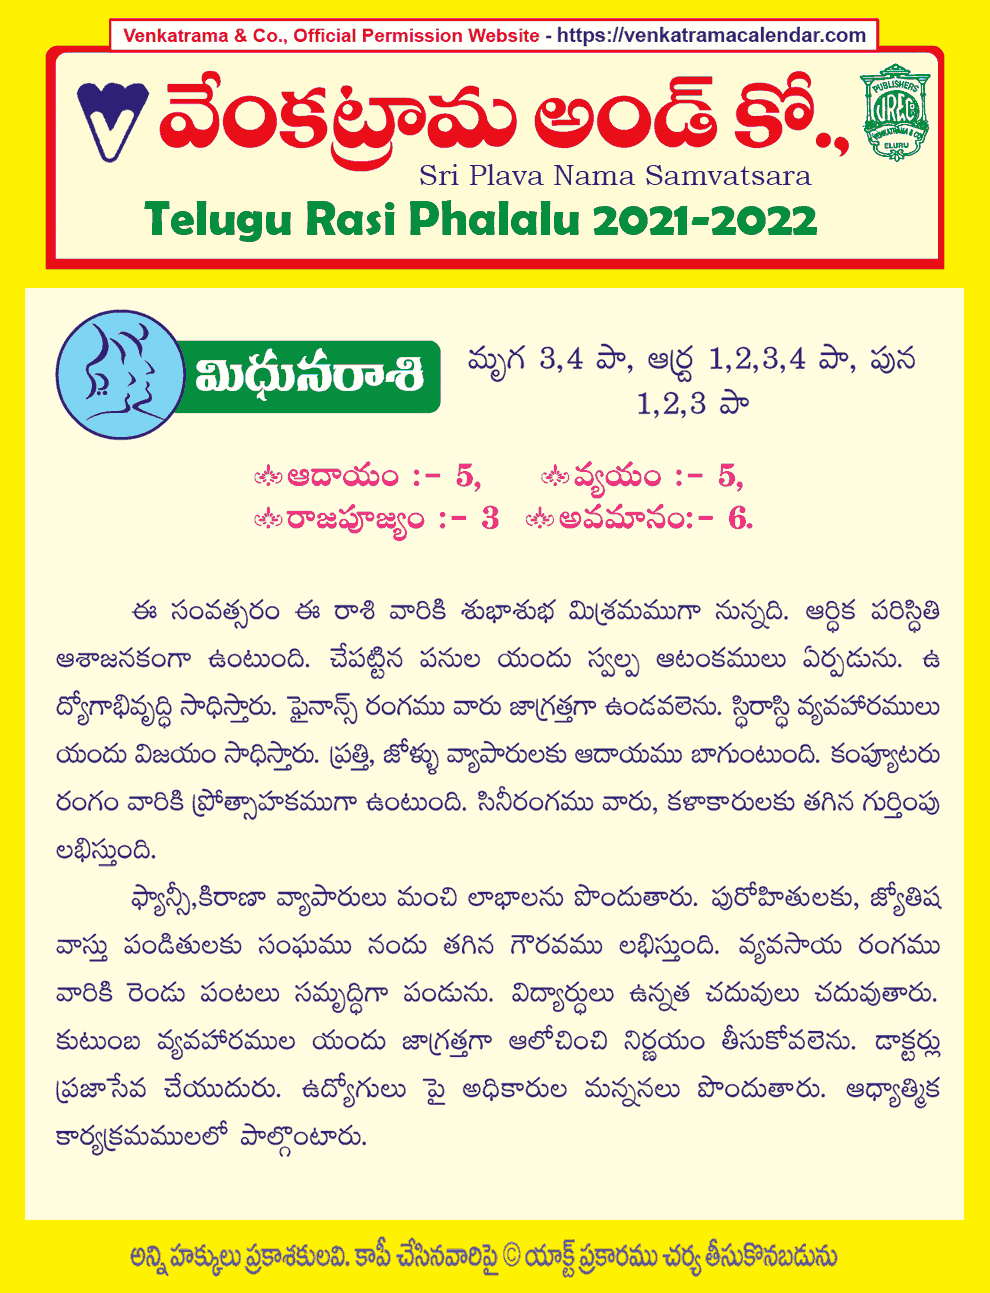 2021-2022-Rasi-Phalalu-Venkatrama-Co-Mithuna.png